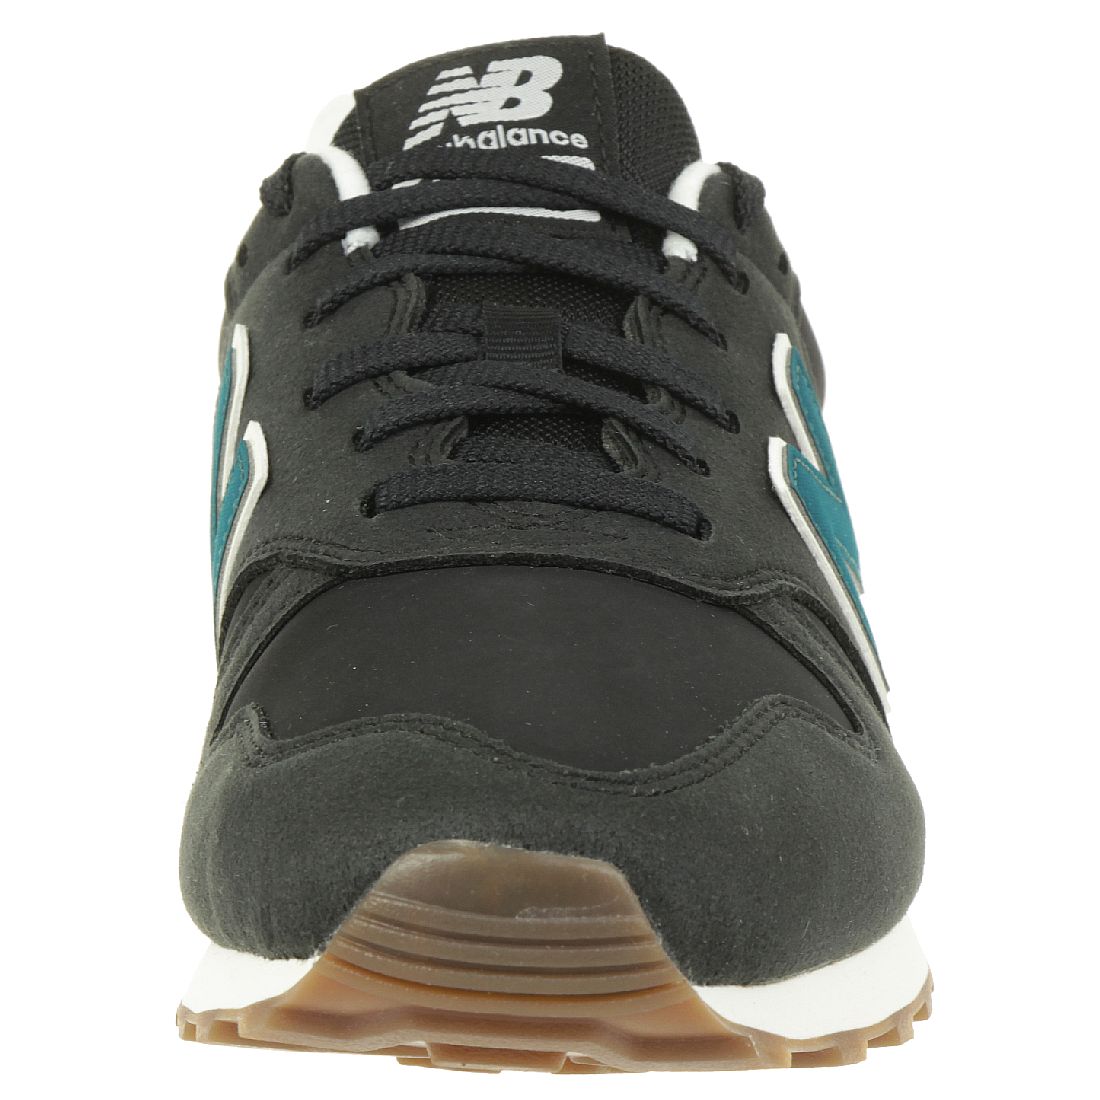 New Balance ML373BYS Classic Sneaker Herren Schuhe schwarz 373